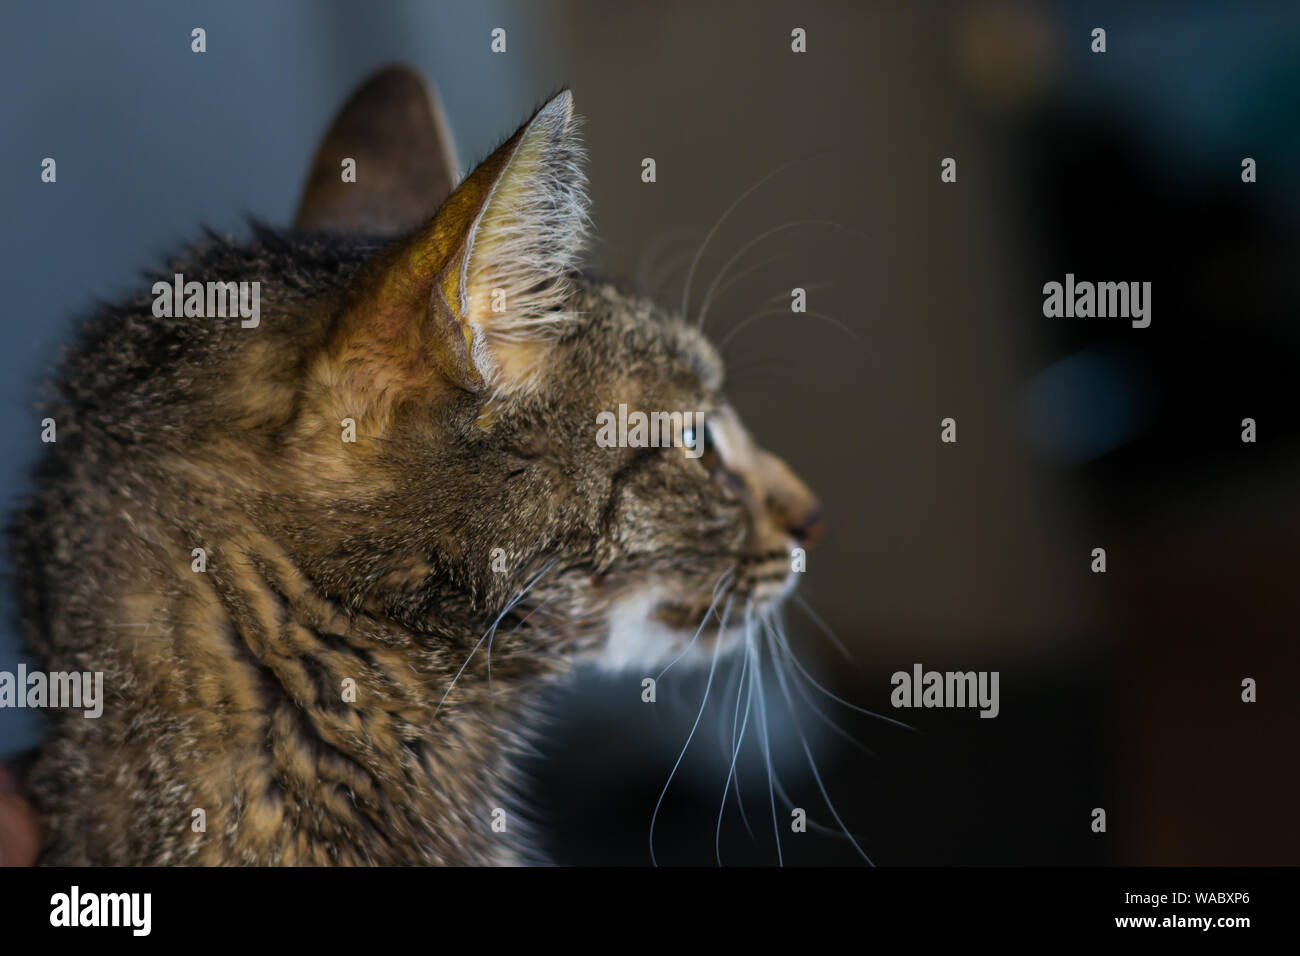 Erwachsene Katze mit Leber faiure, Gelbsucht Haut und Dehydratation  Stockfotografie - Alamy